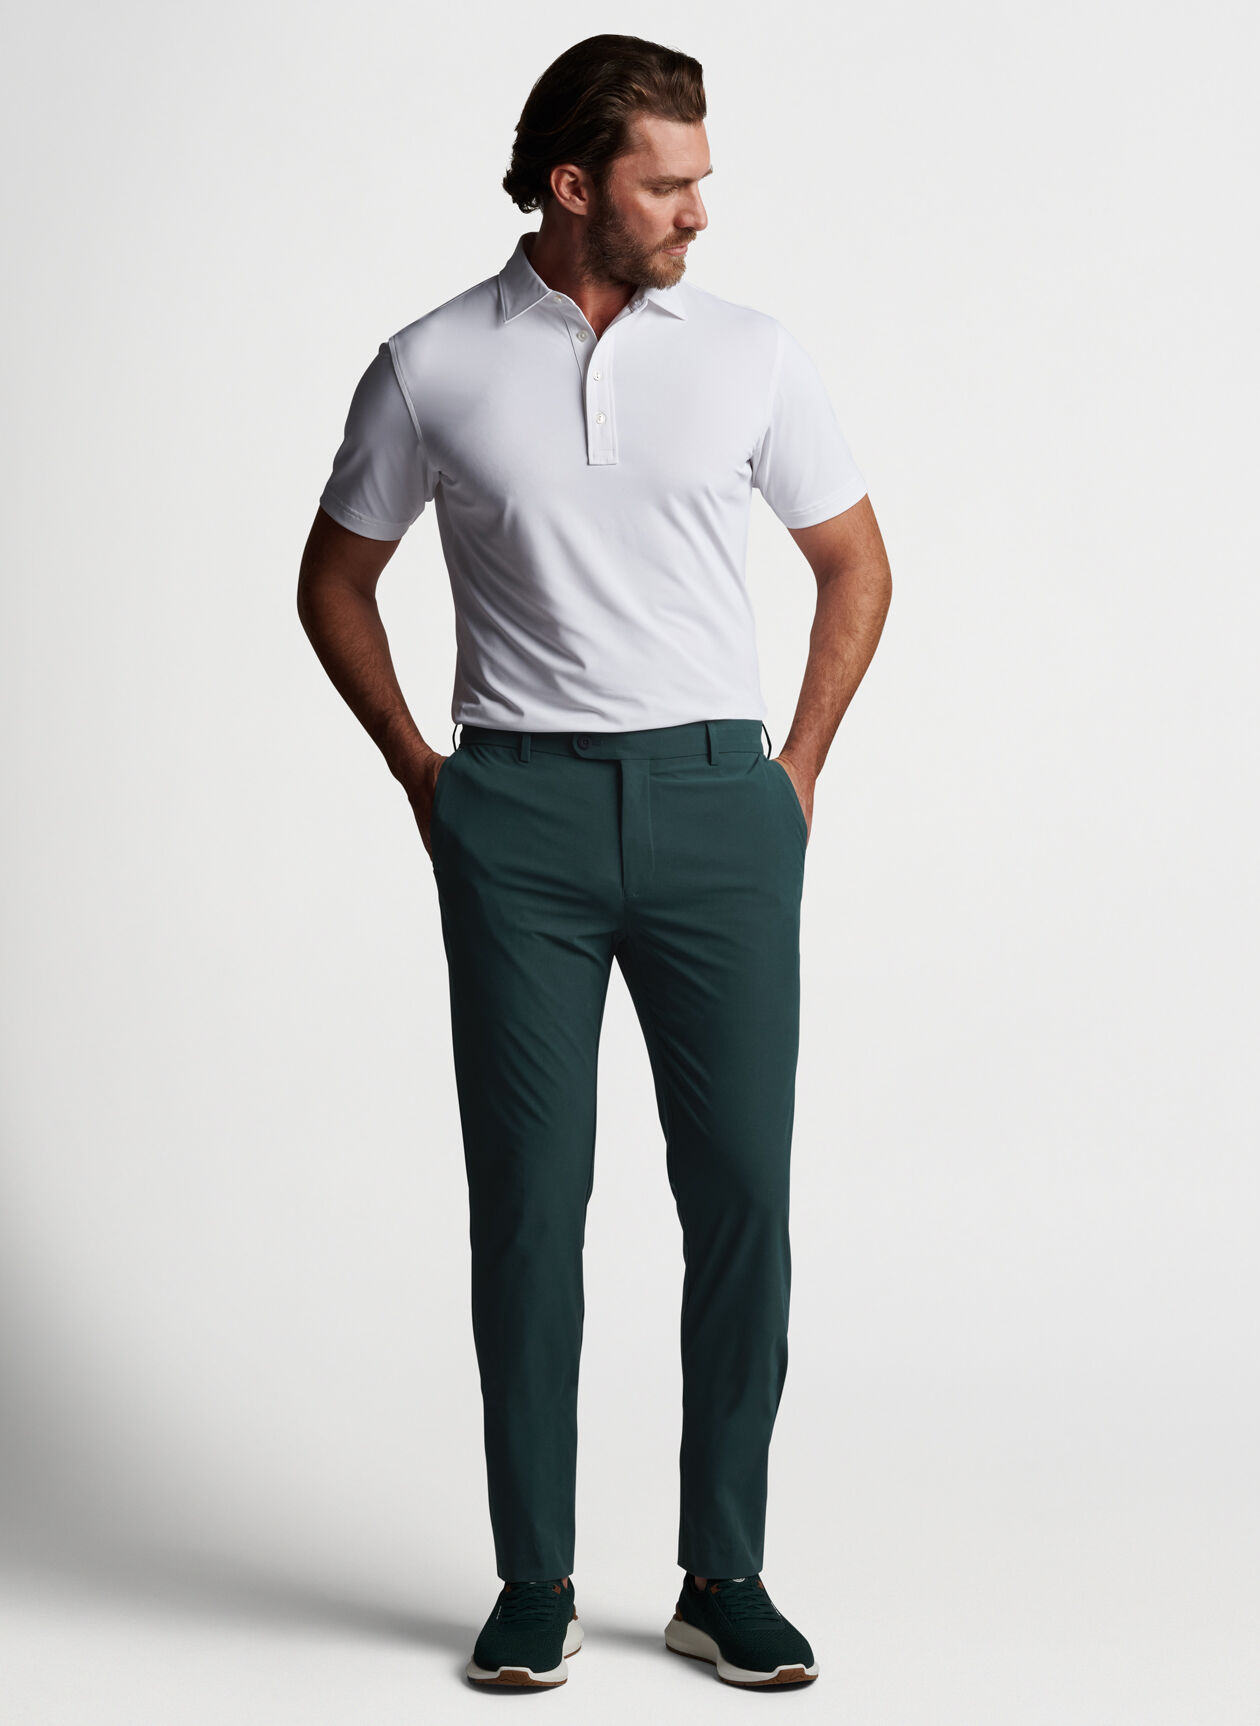 Surge Performance Trouser | Men's Pants | Peter Millar